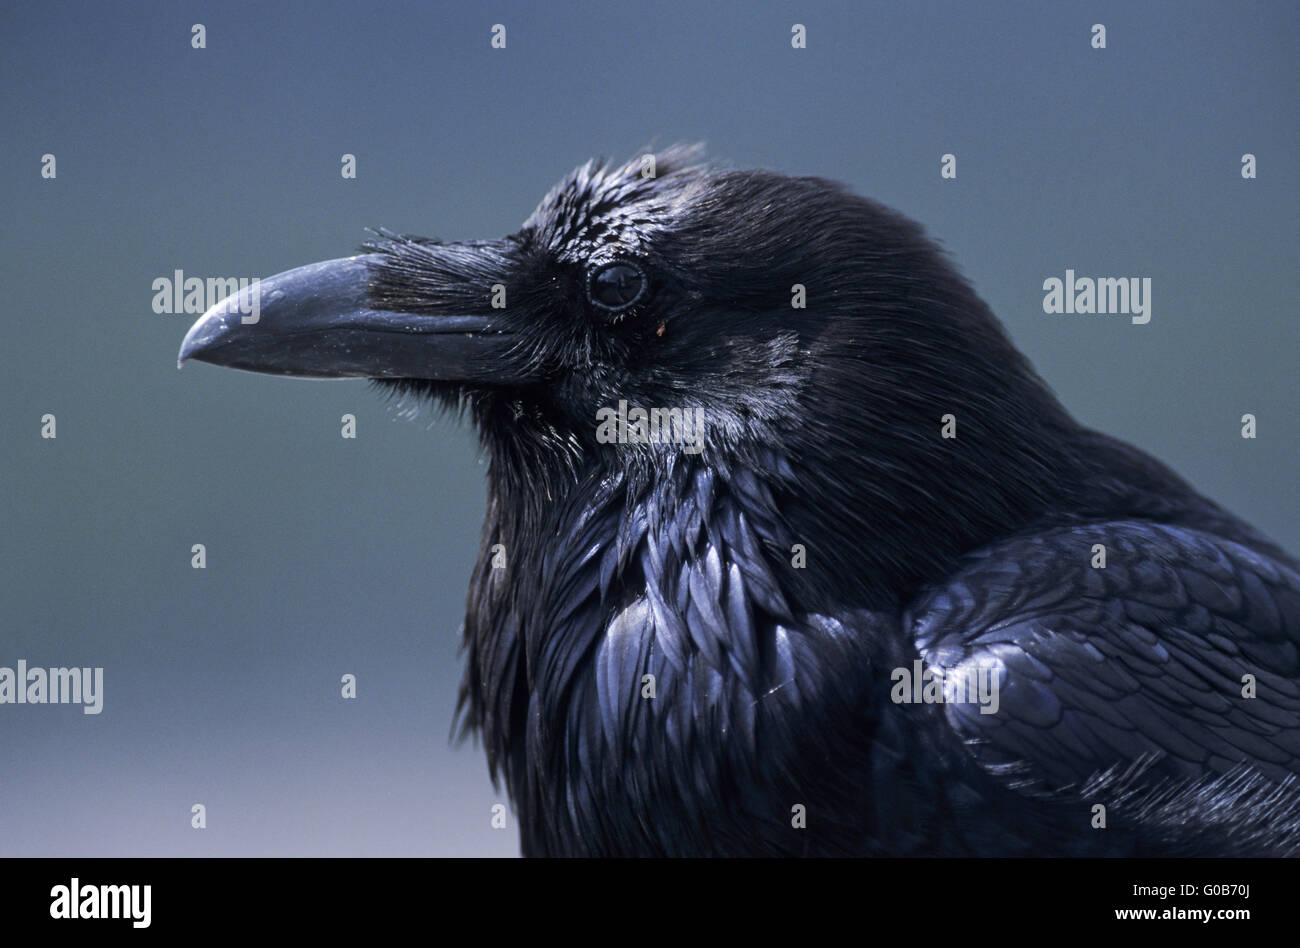 Common Raven portrait of an adult bird Stock Photo